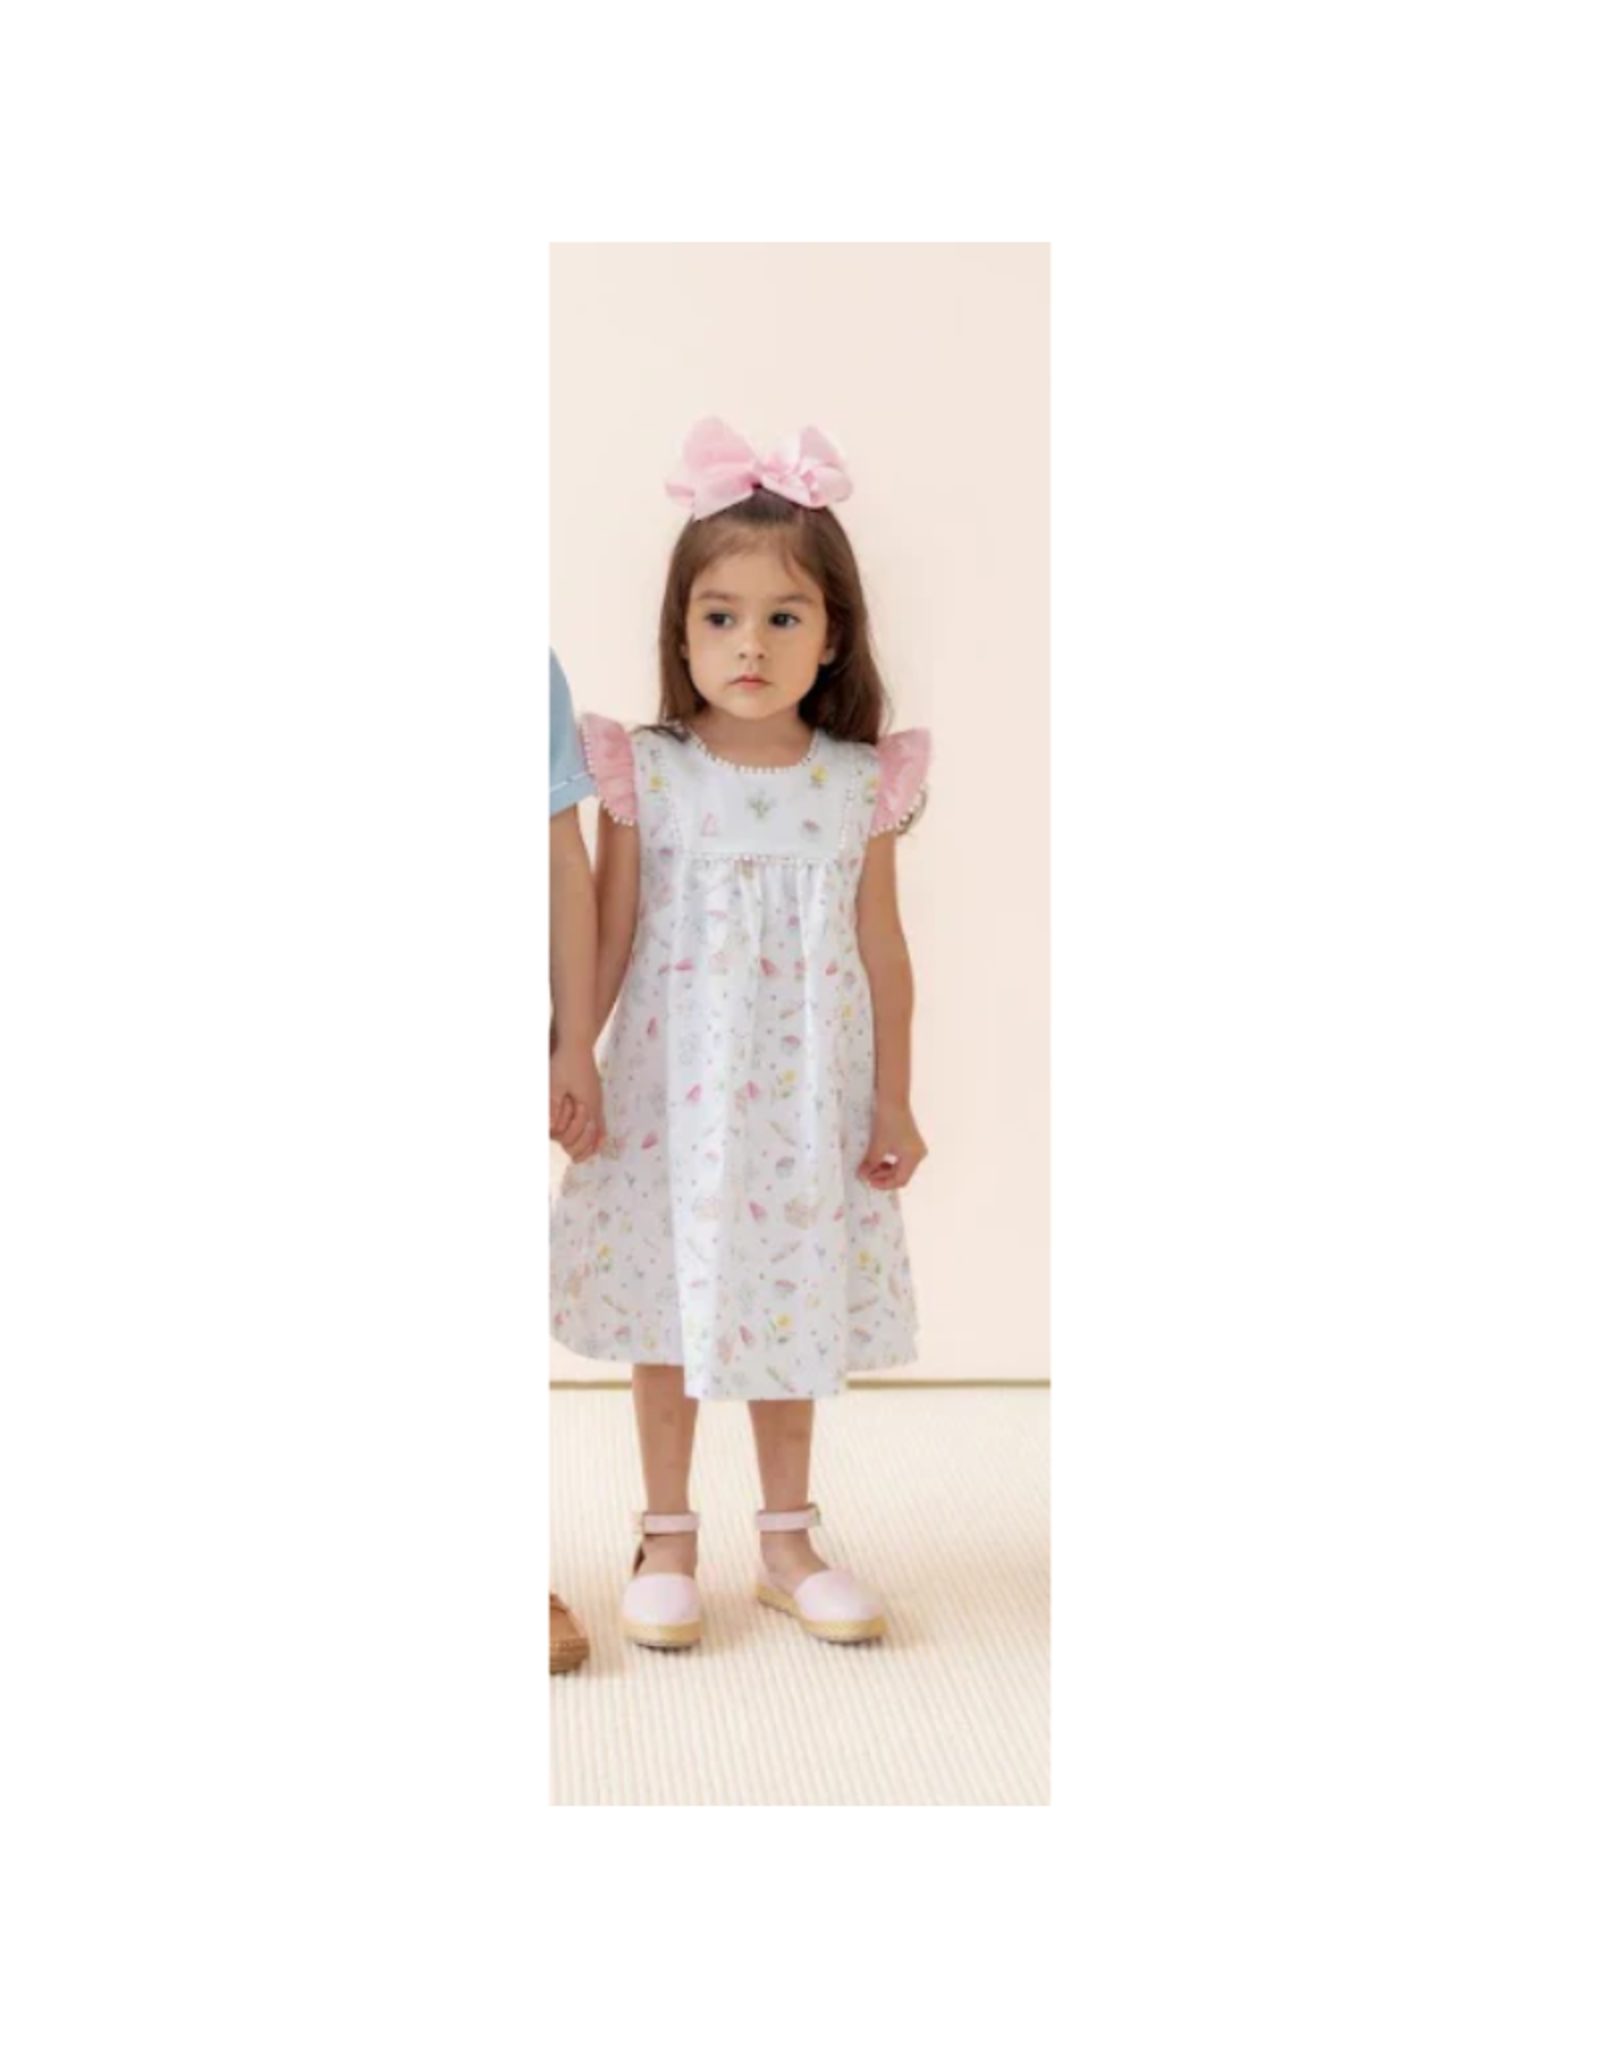 La Boutique by Dondolo Picnic Dress, Pink & White